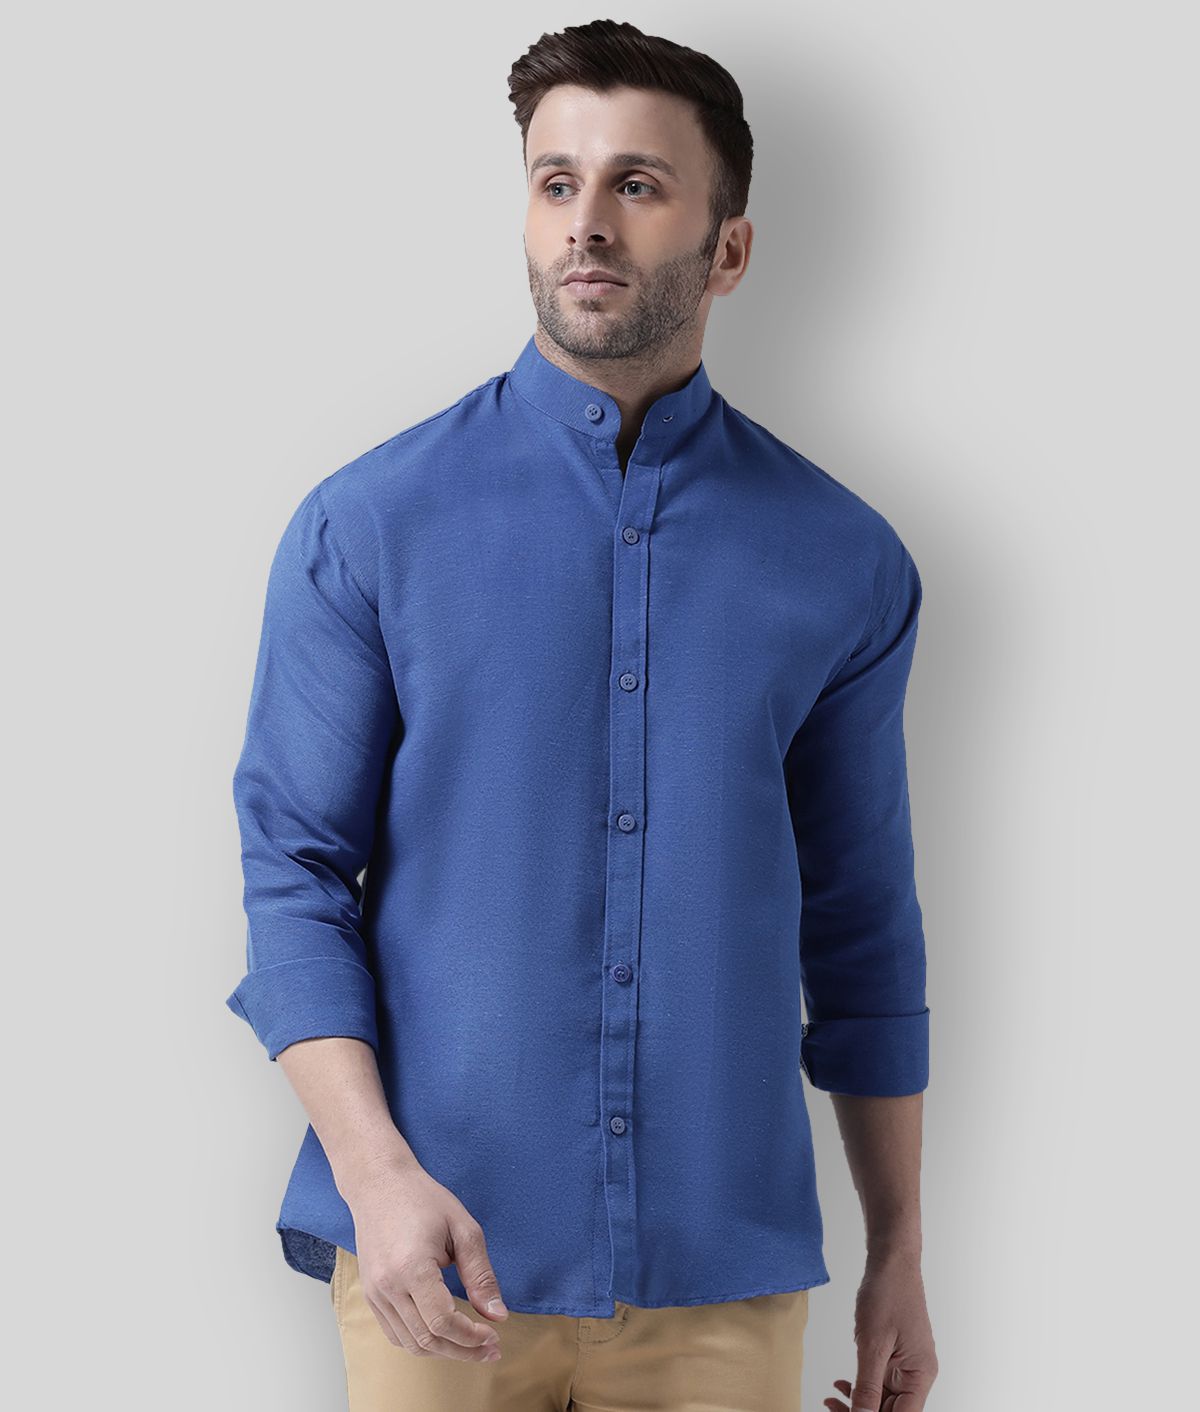     			RIAG - Blue Cotton Regular Fit Men's Casual Shirt (Pack of 1 )